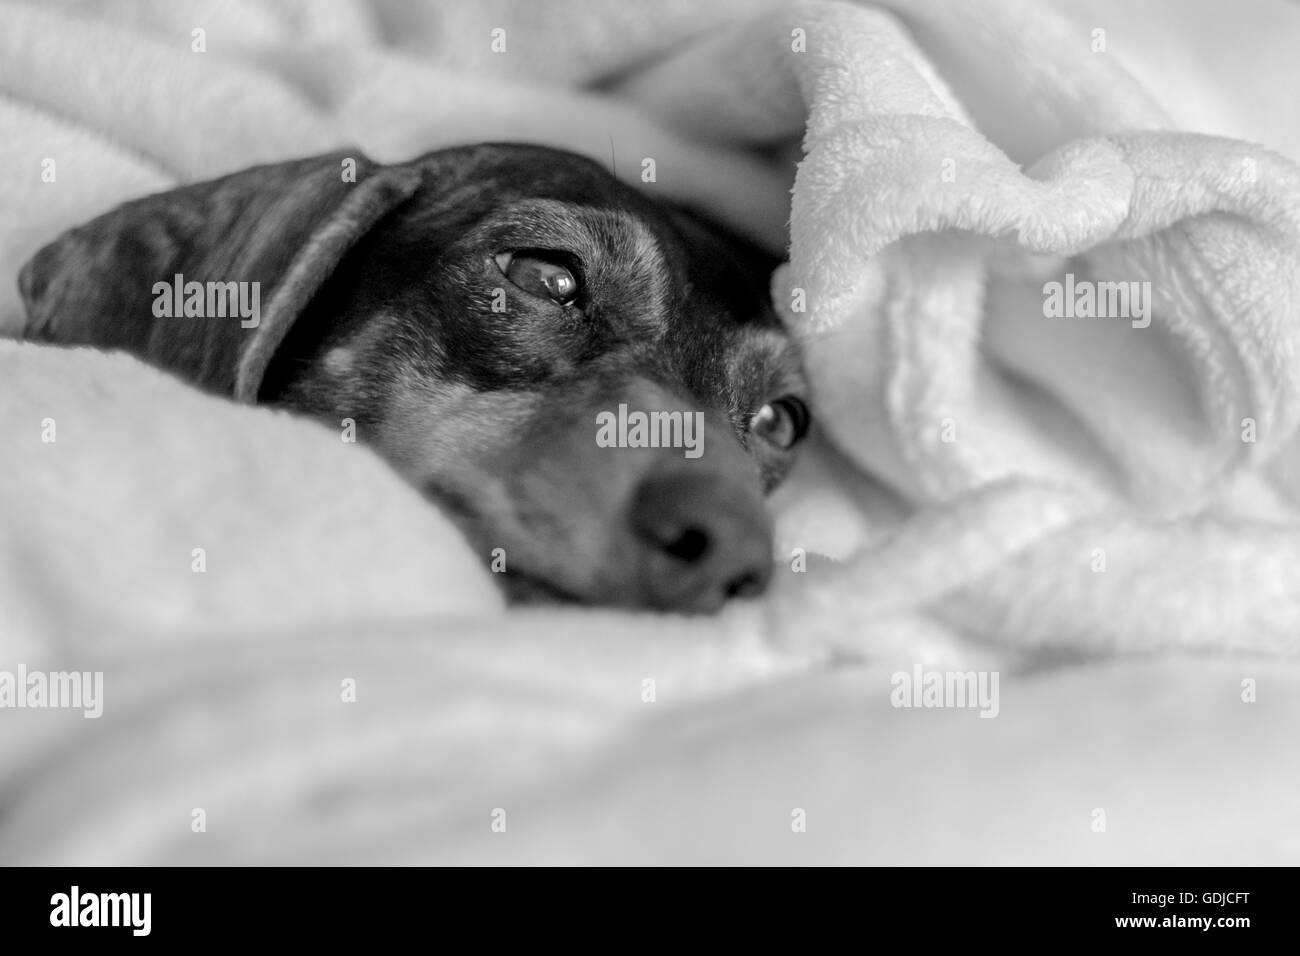 A mini Dachshund cuddles in a blanket sleepy snuggle. Stock Photo